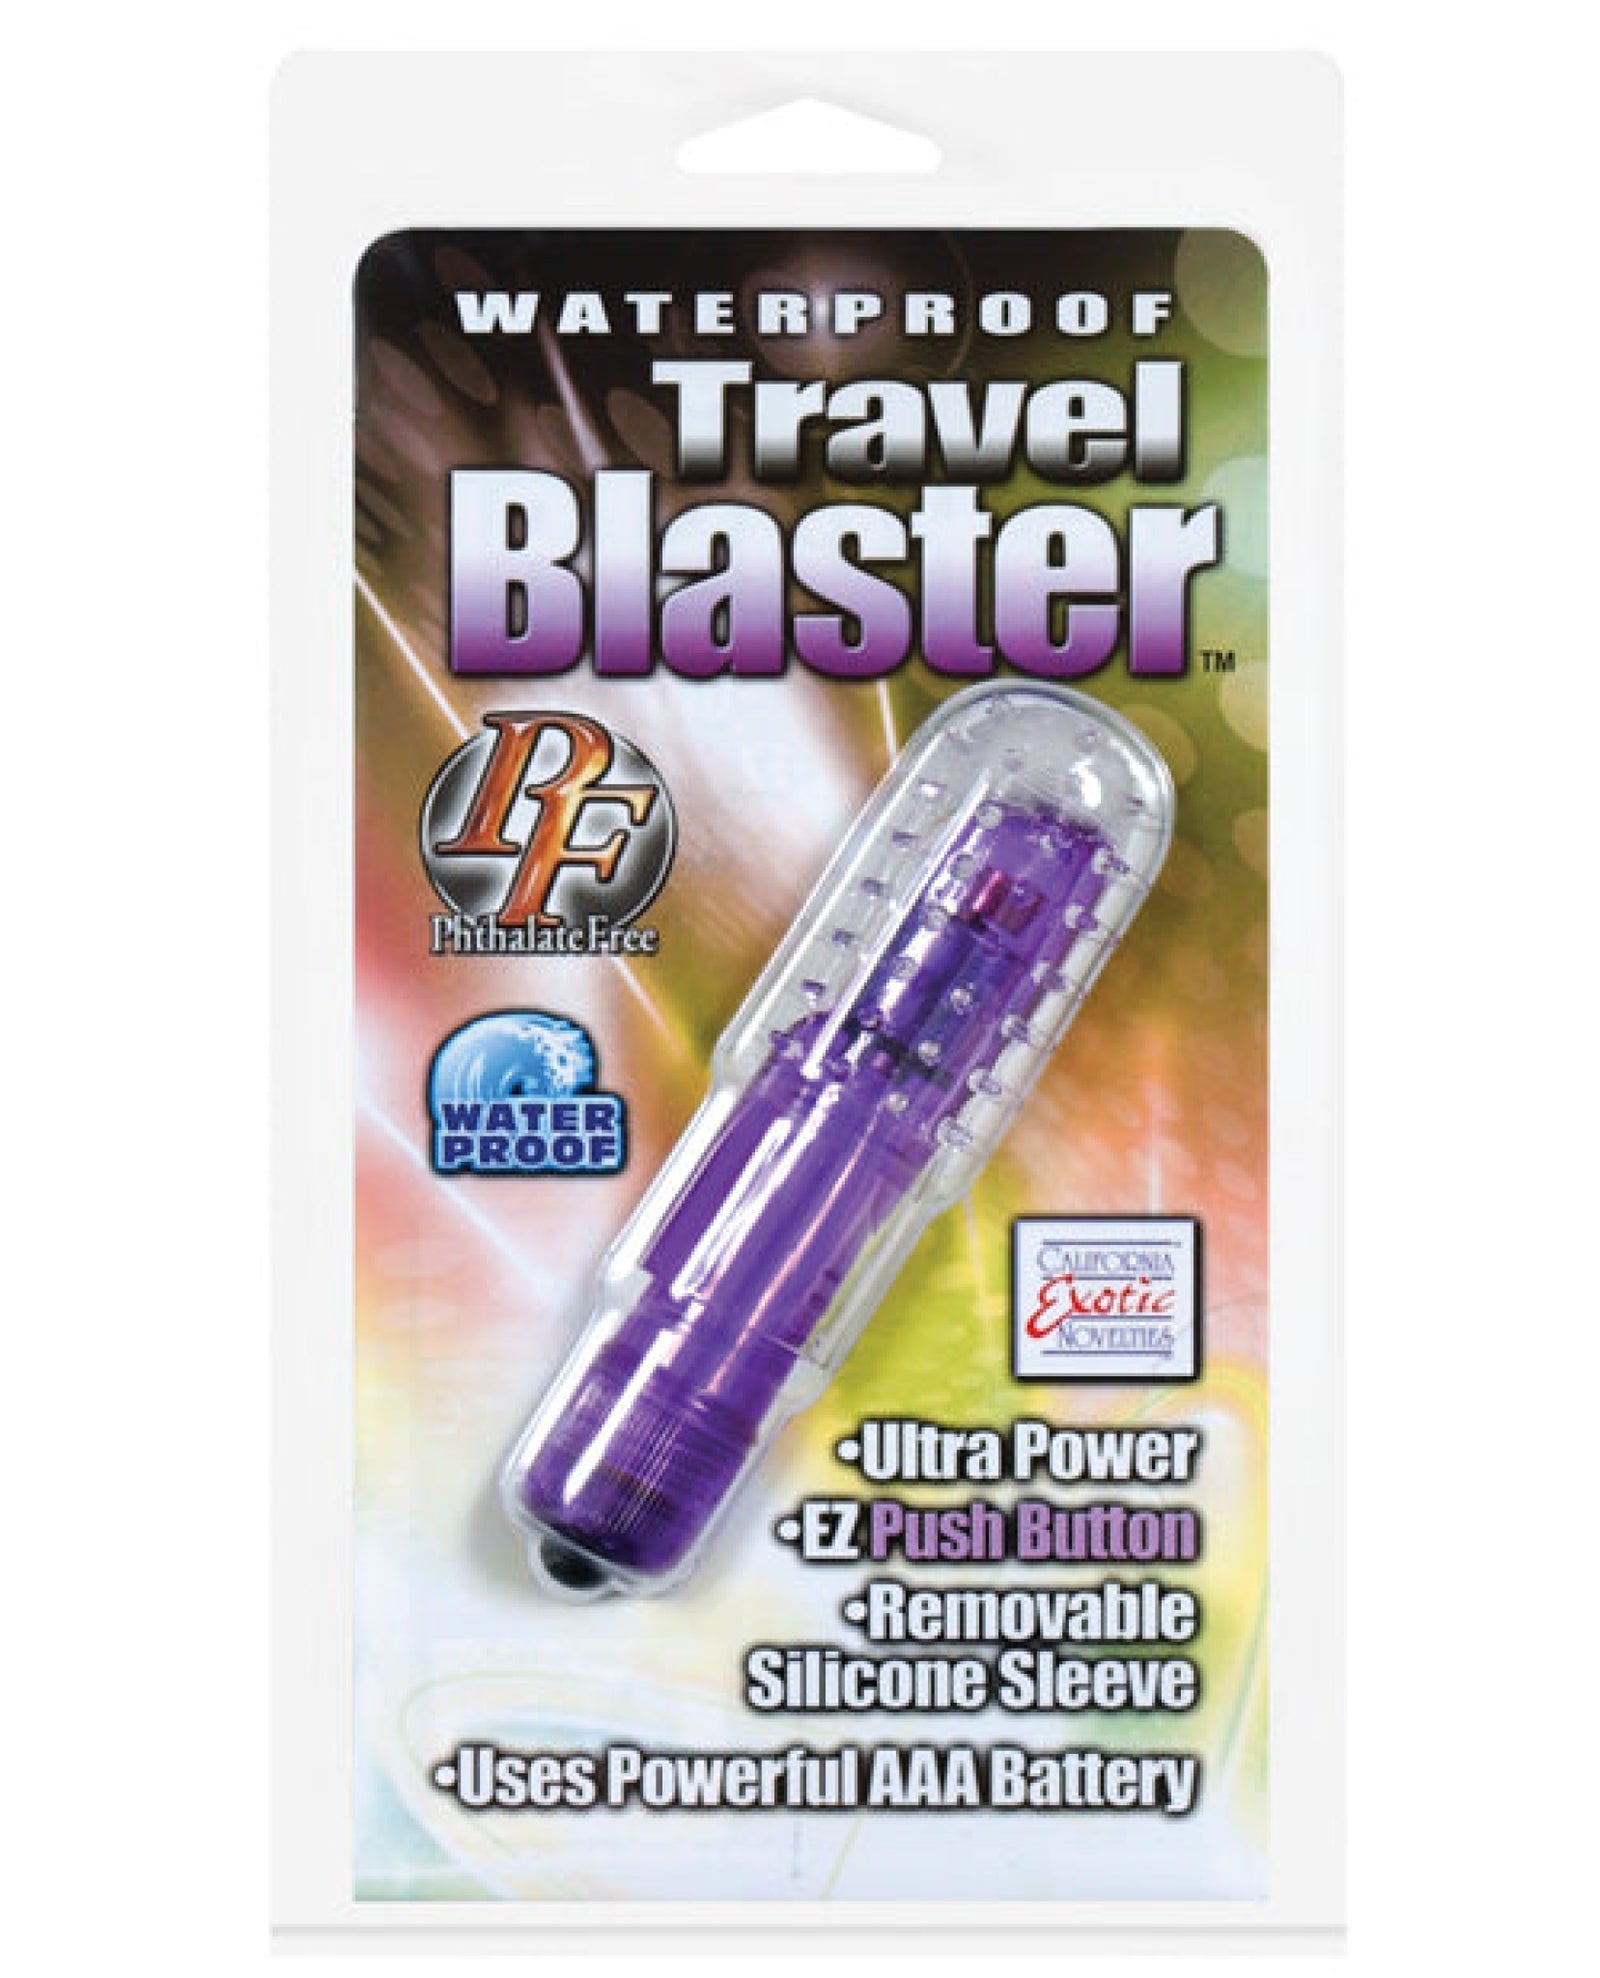 Travel Blaster W/silicone Sleeve Waterproof California Exotic Novelties